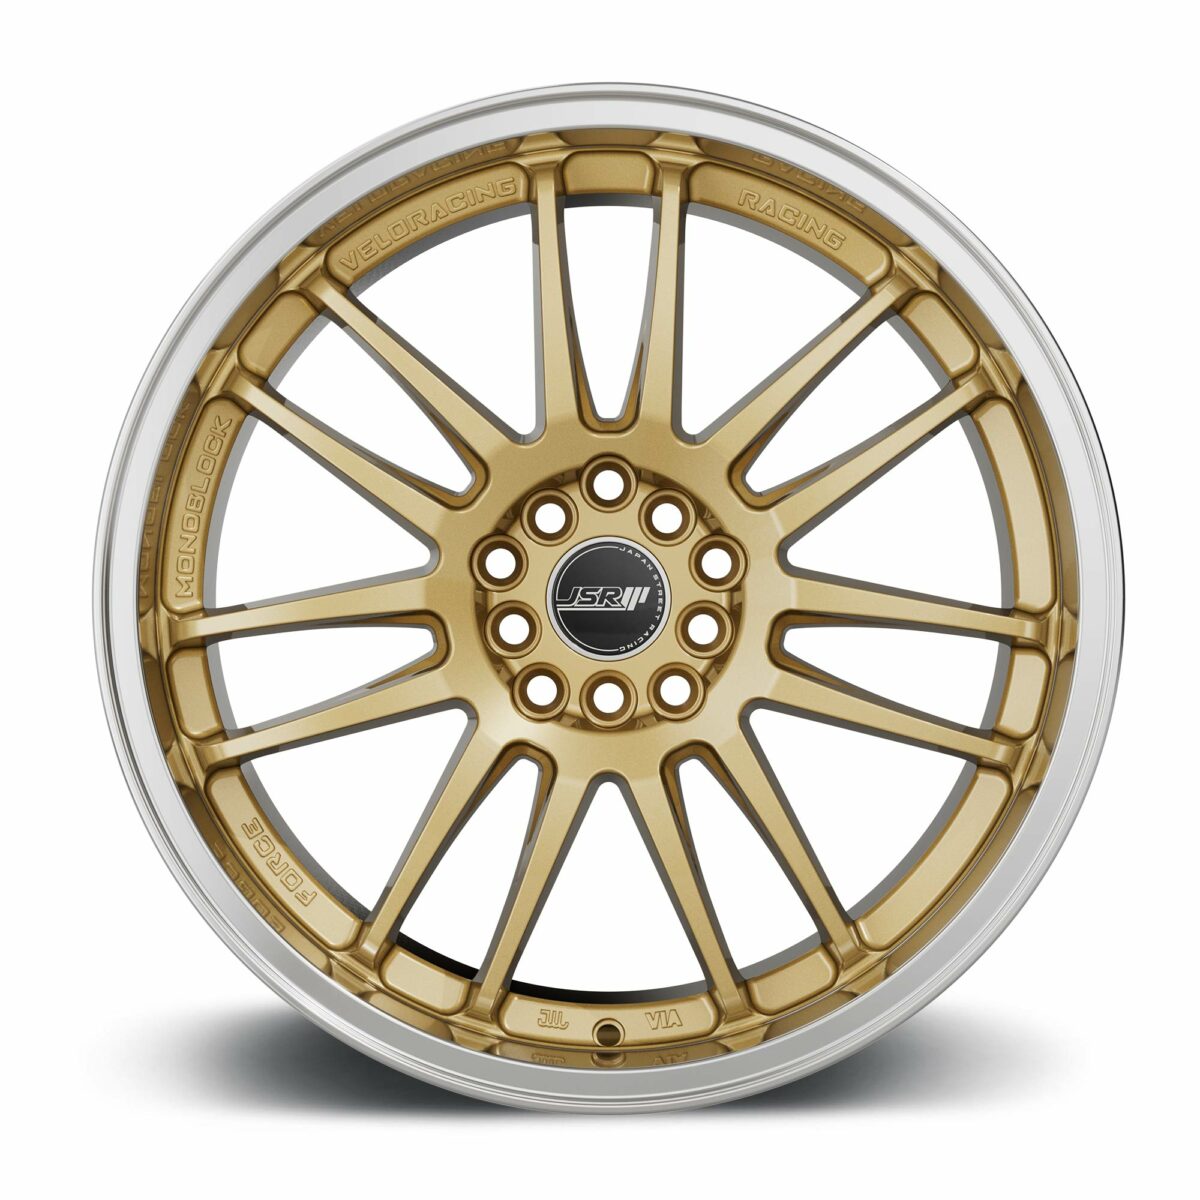 Racing Wheels JSR ST32 Gold Machined Lip Rims Japan Street Racing Wheels